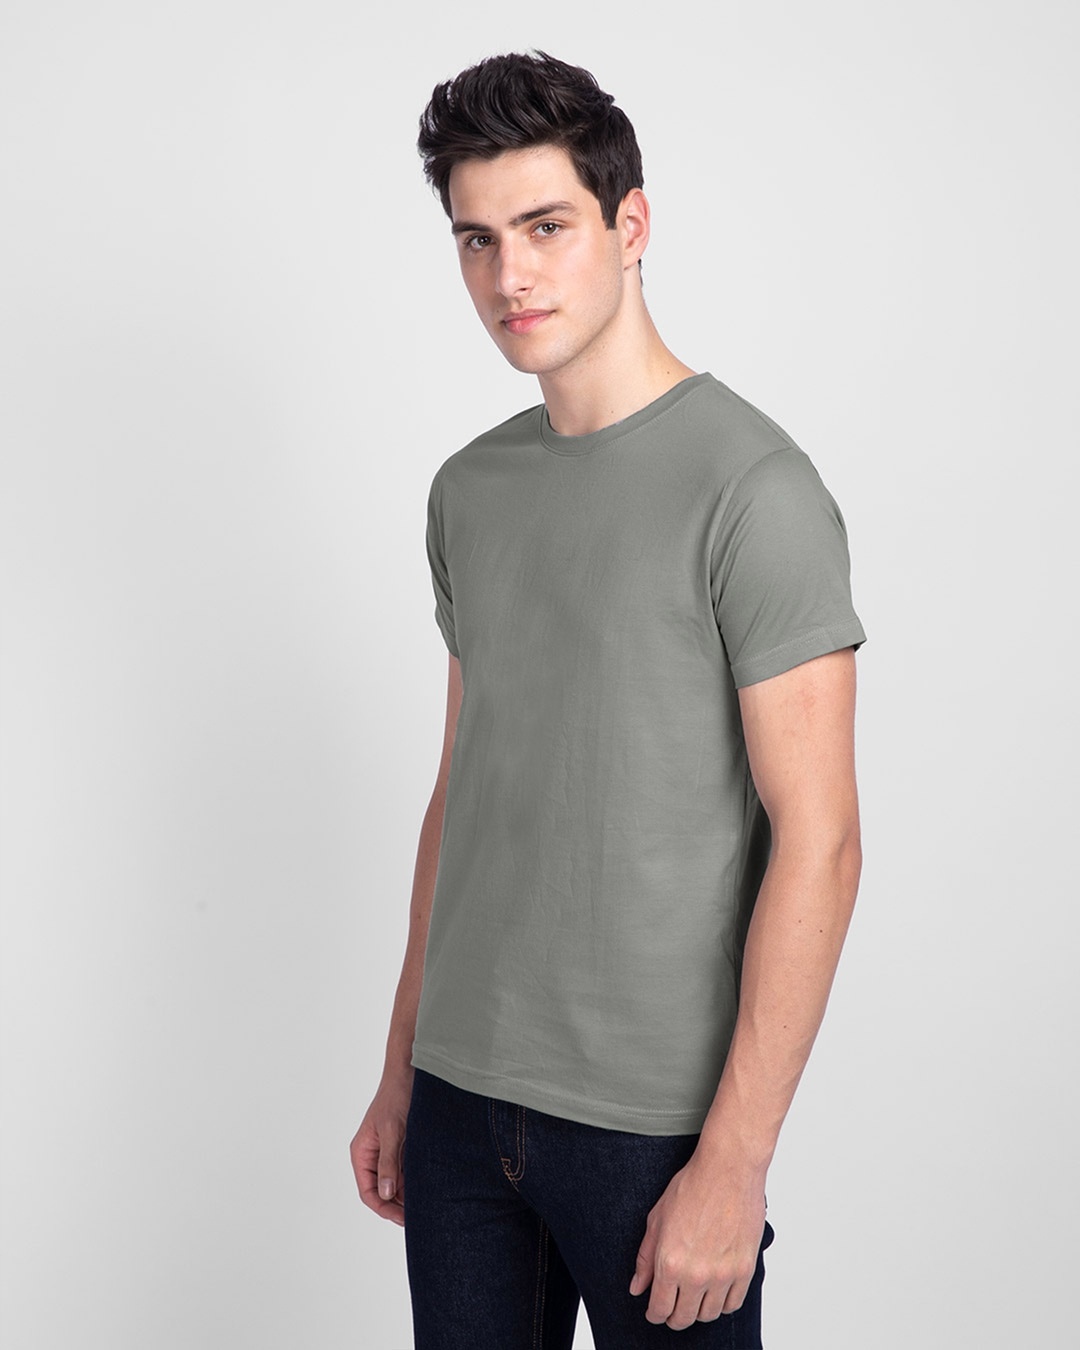 Shop Men's Plain Half Sleeve T-shirt Pack of 2(Black & Meteor Grey)